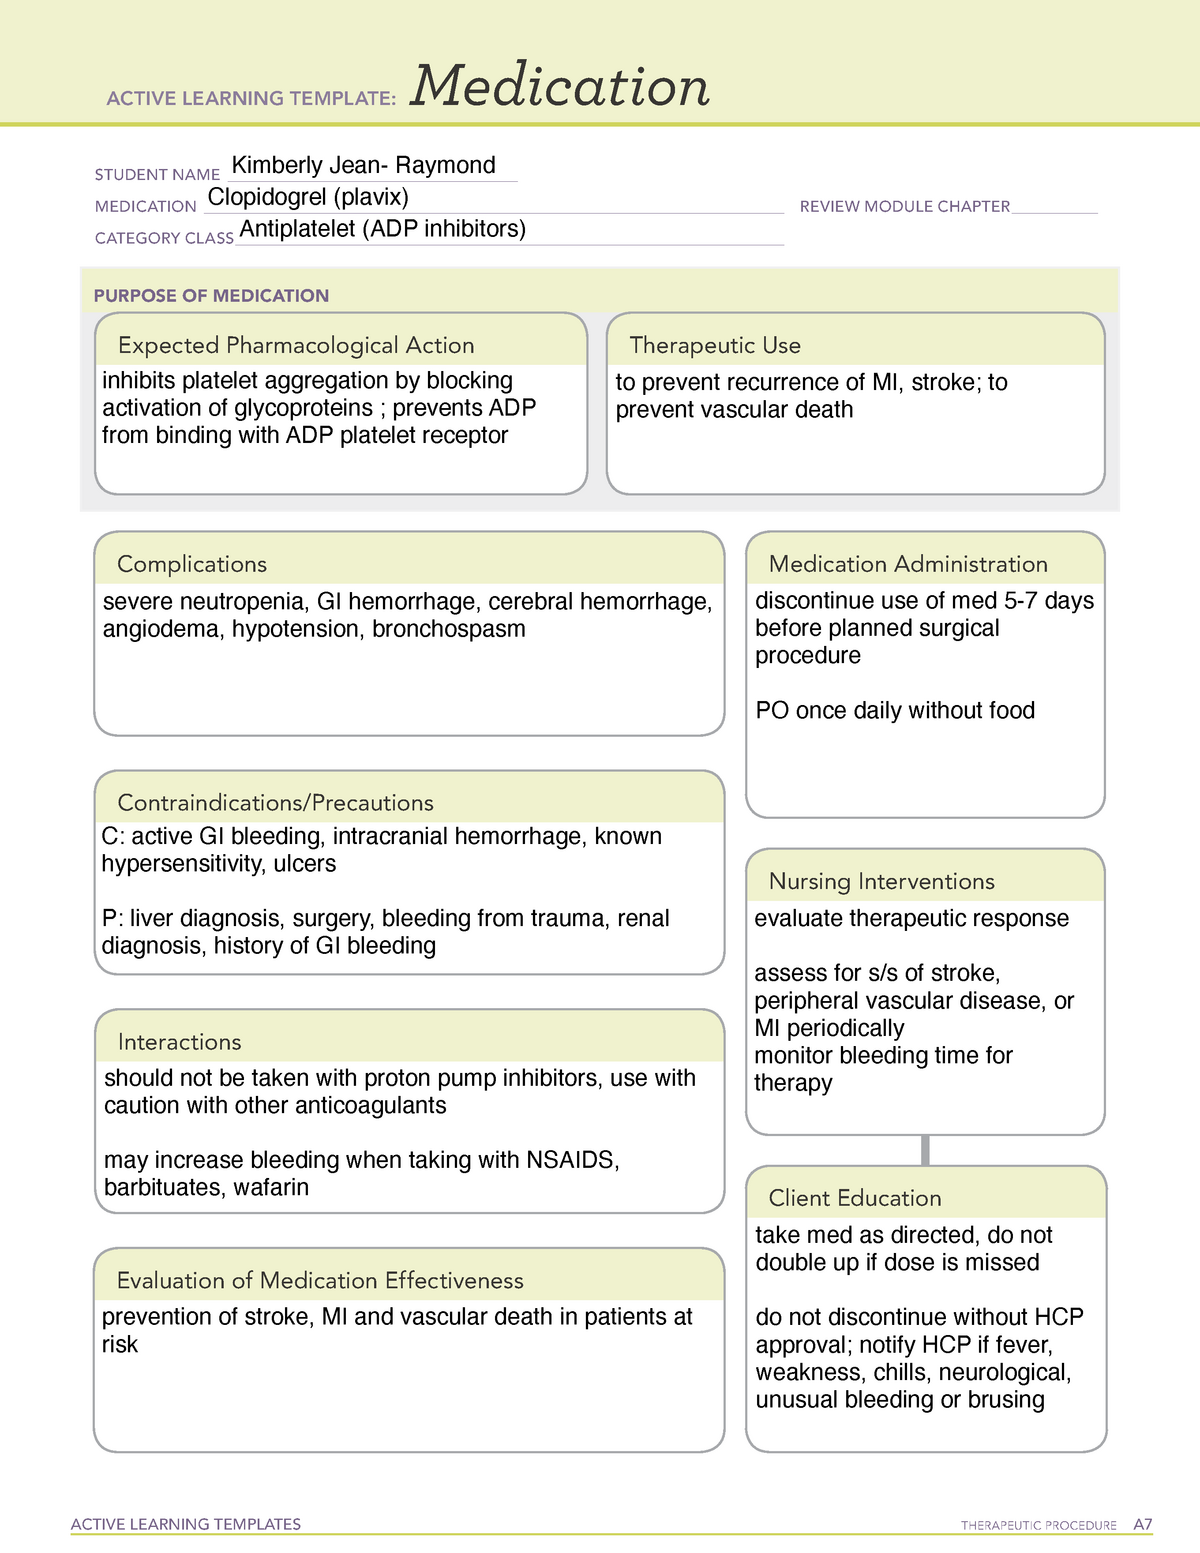 clopidogrel medication template